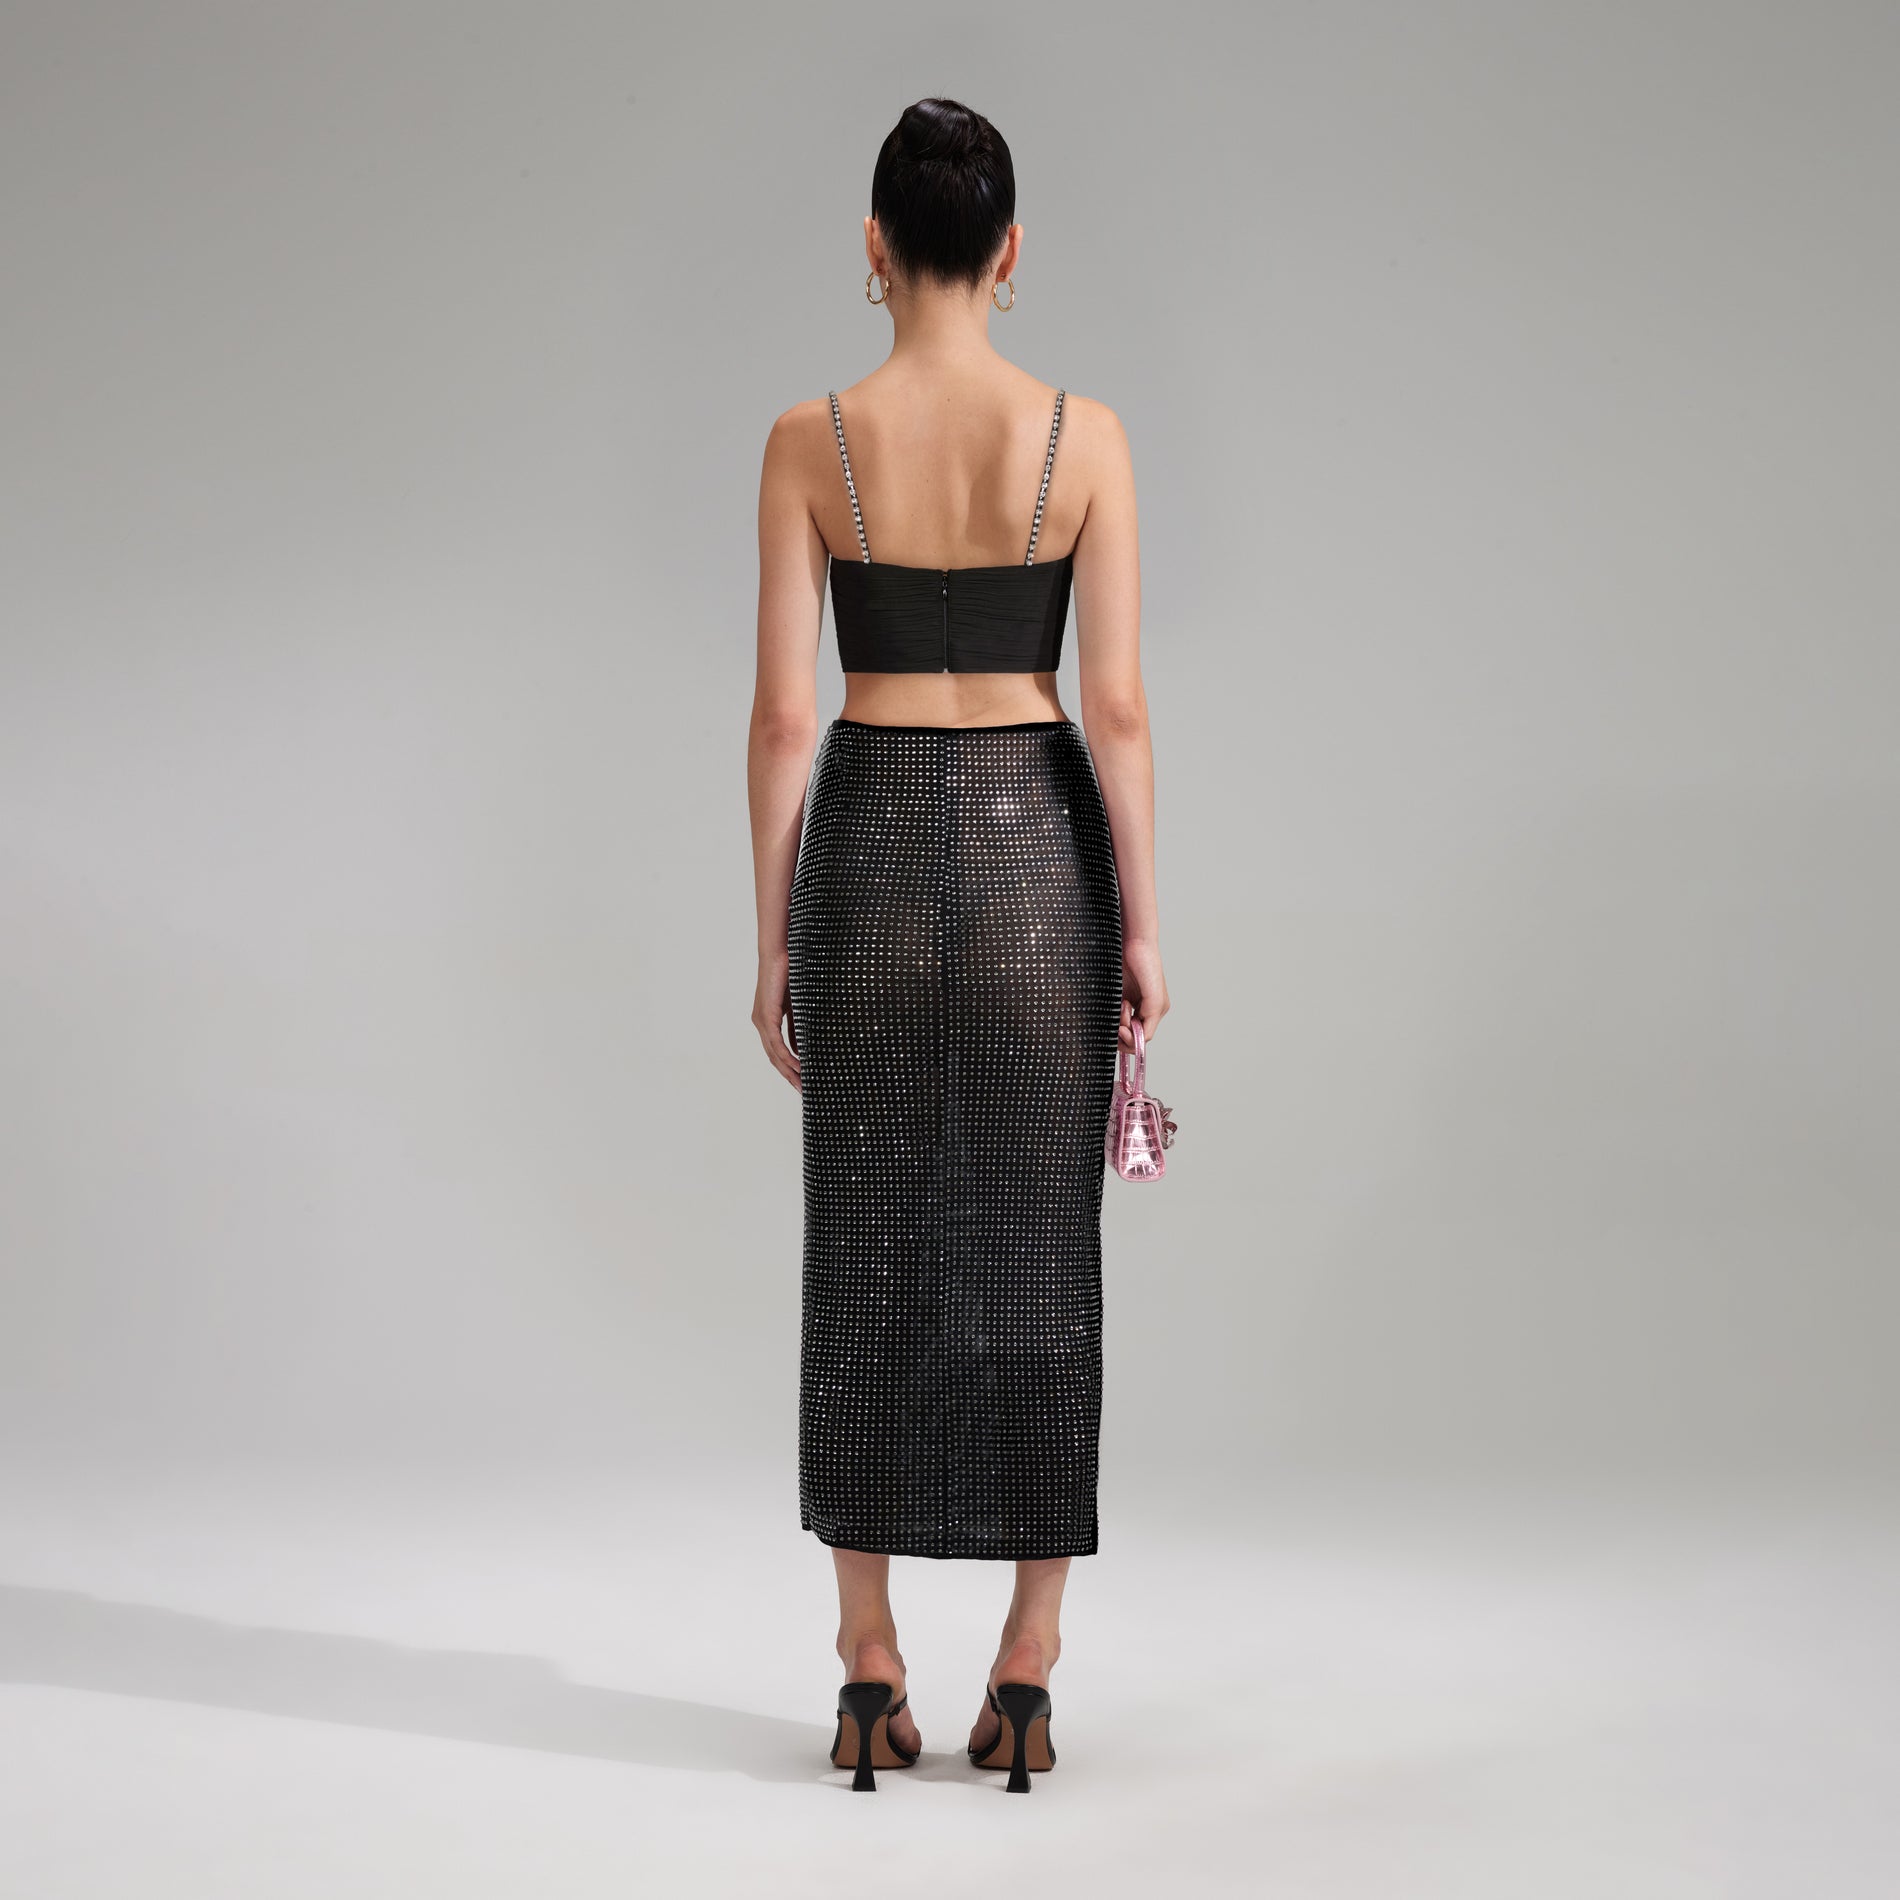 A woman wearing the Black Rhinestone Midi Skirt